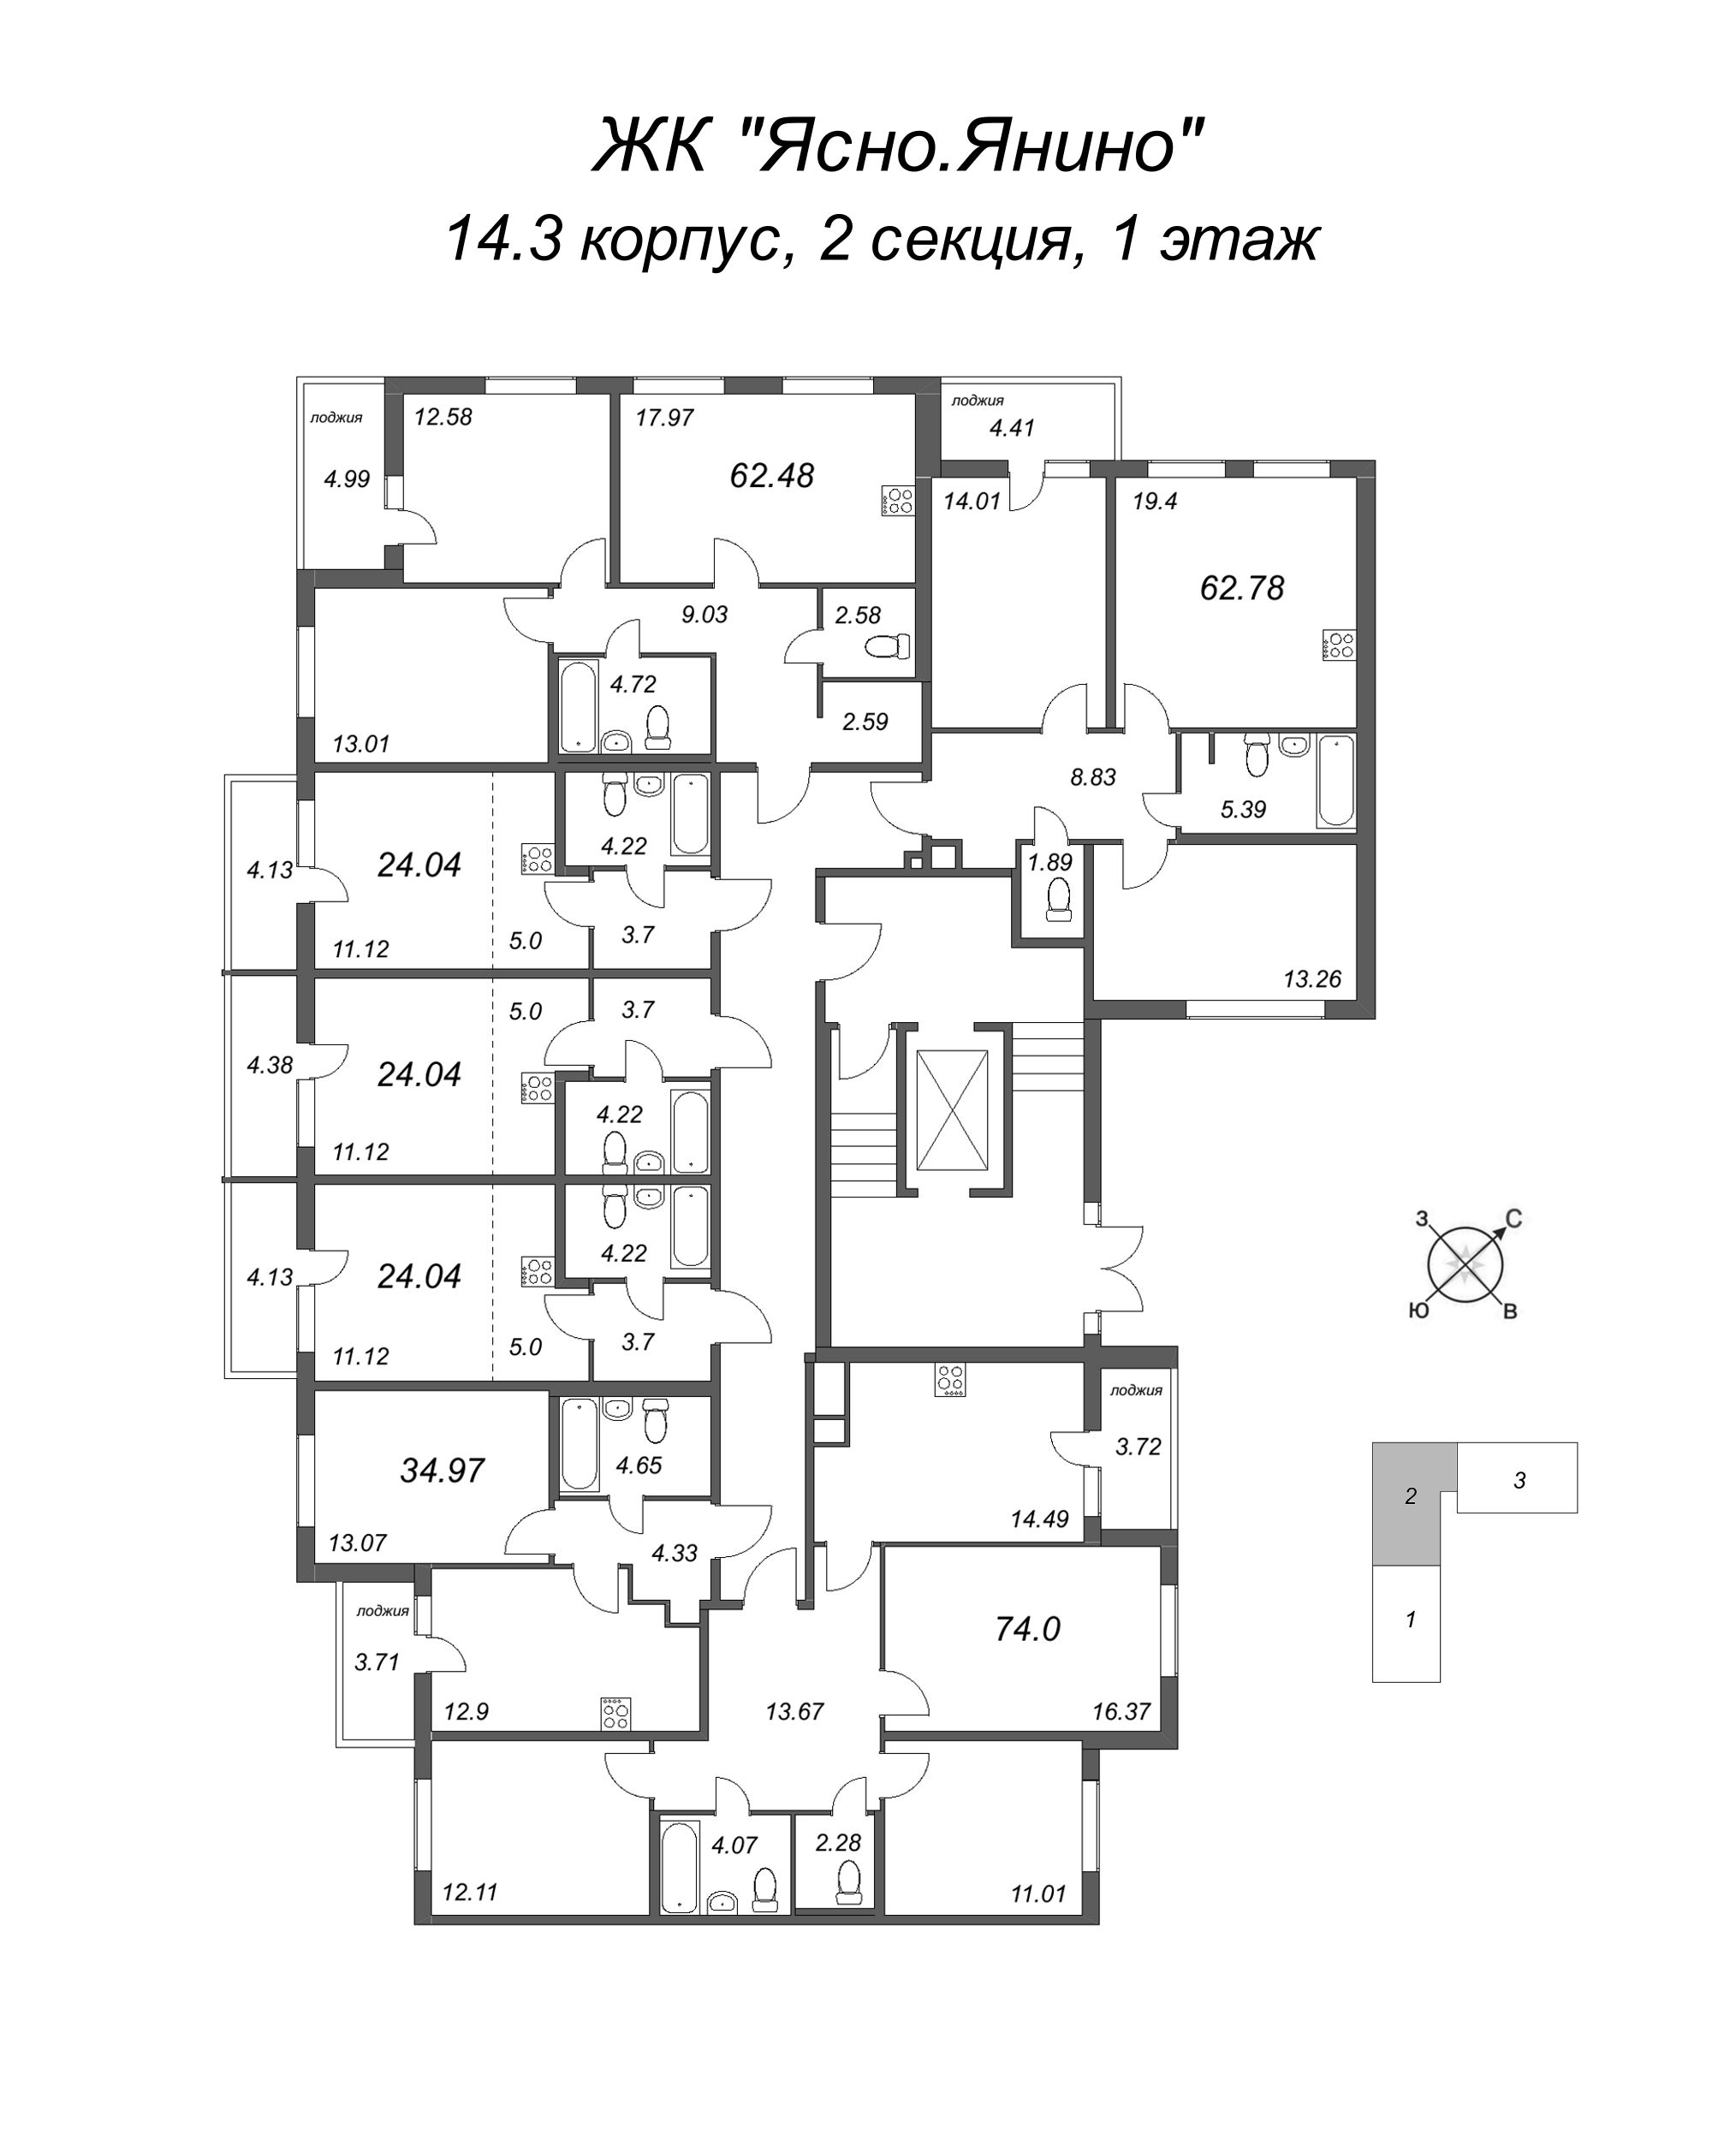 1-комнатная квартира, 34.97 м² в ЖК "Ясно.Янино" - планировка этажа